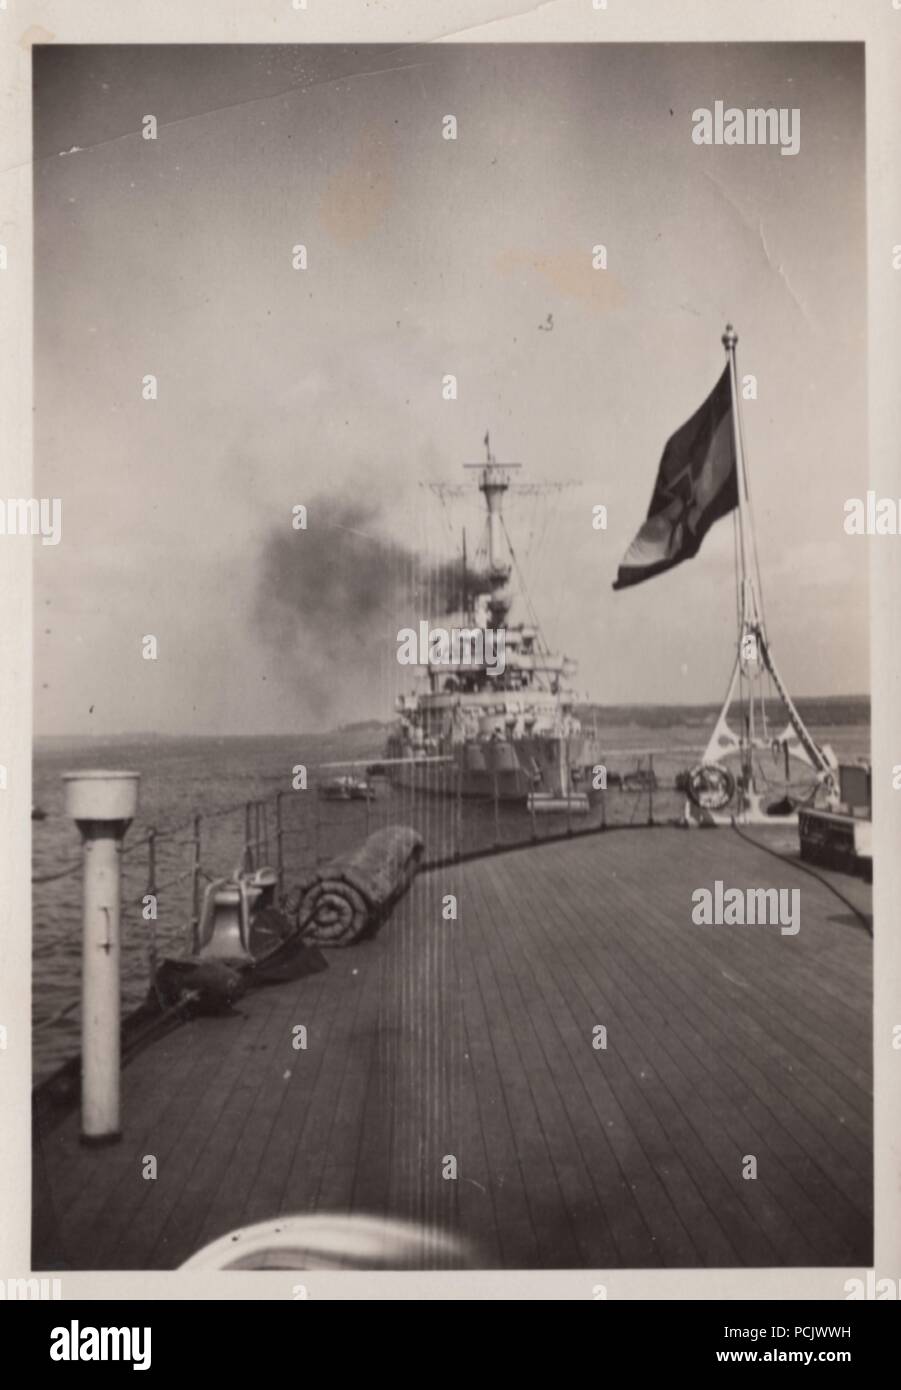 Image from the photo album of Oberfänrich Wilhelm Gaul - German Battleships in line during the Spanish Civil War. Stock Photo